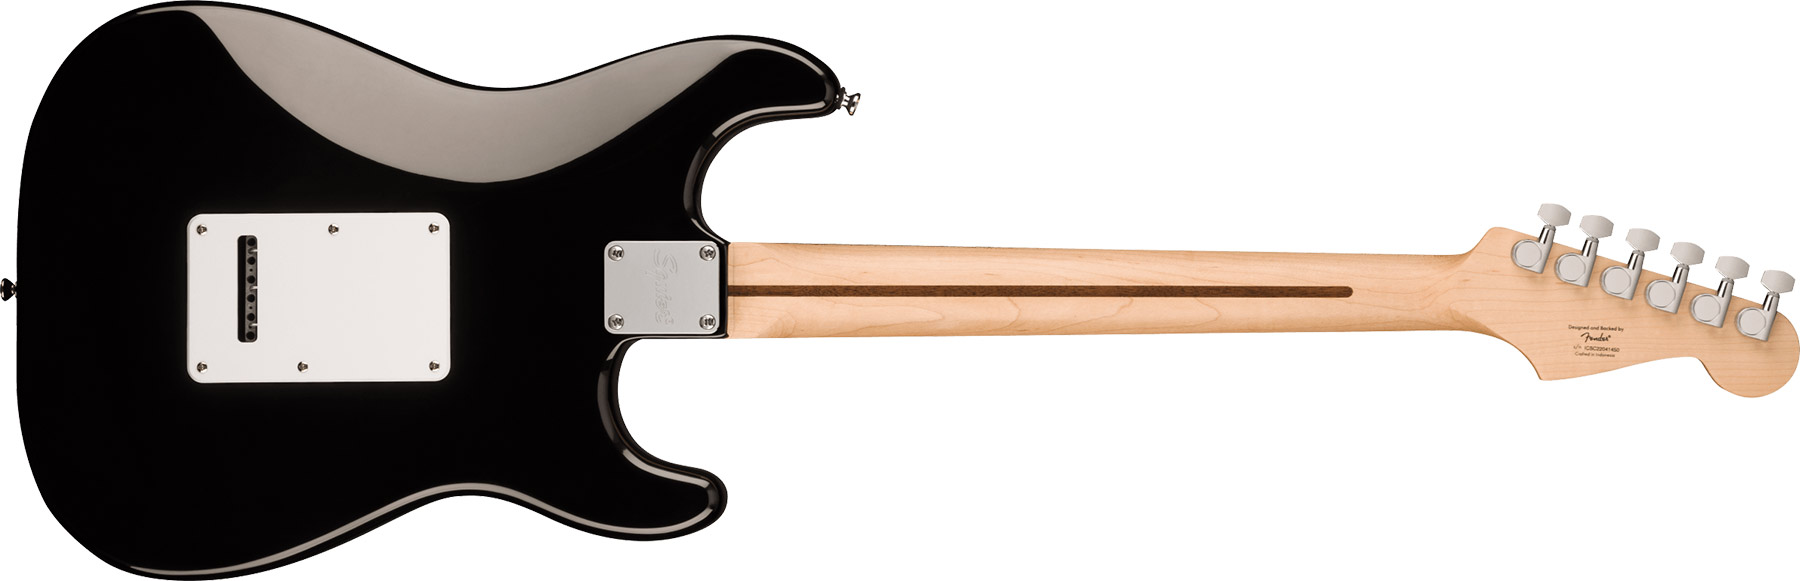 Squier Strat Sonic Lh Gaucher 3s Trem Mn - Black - Left-handed electric guitar - Variation 1